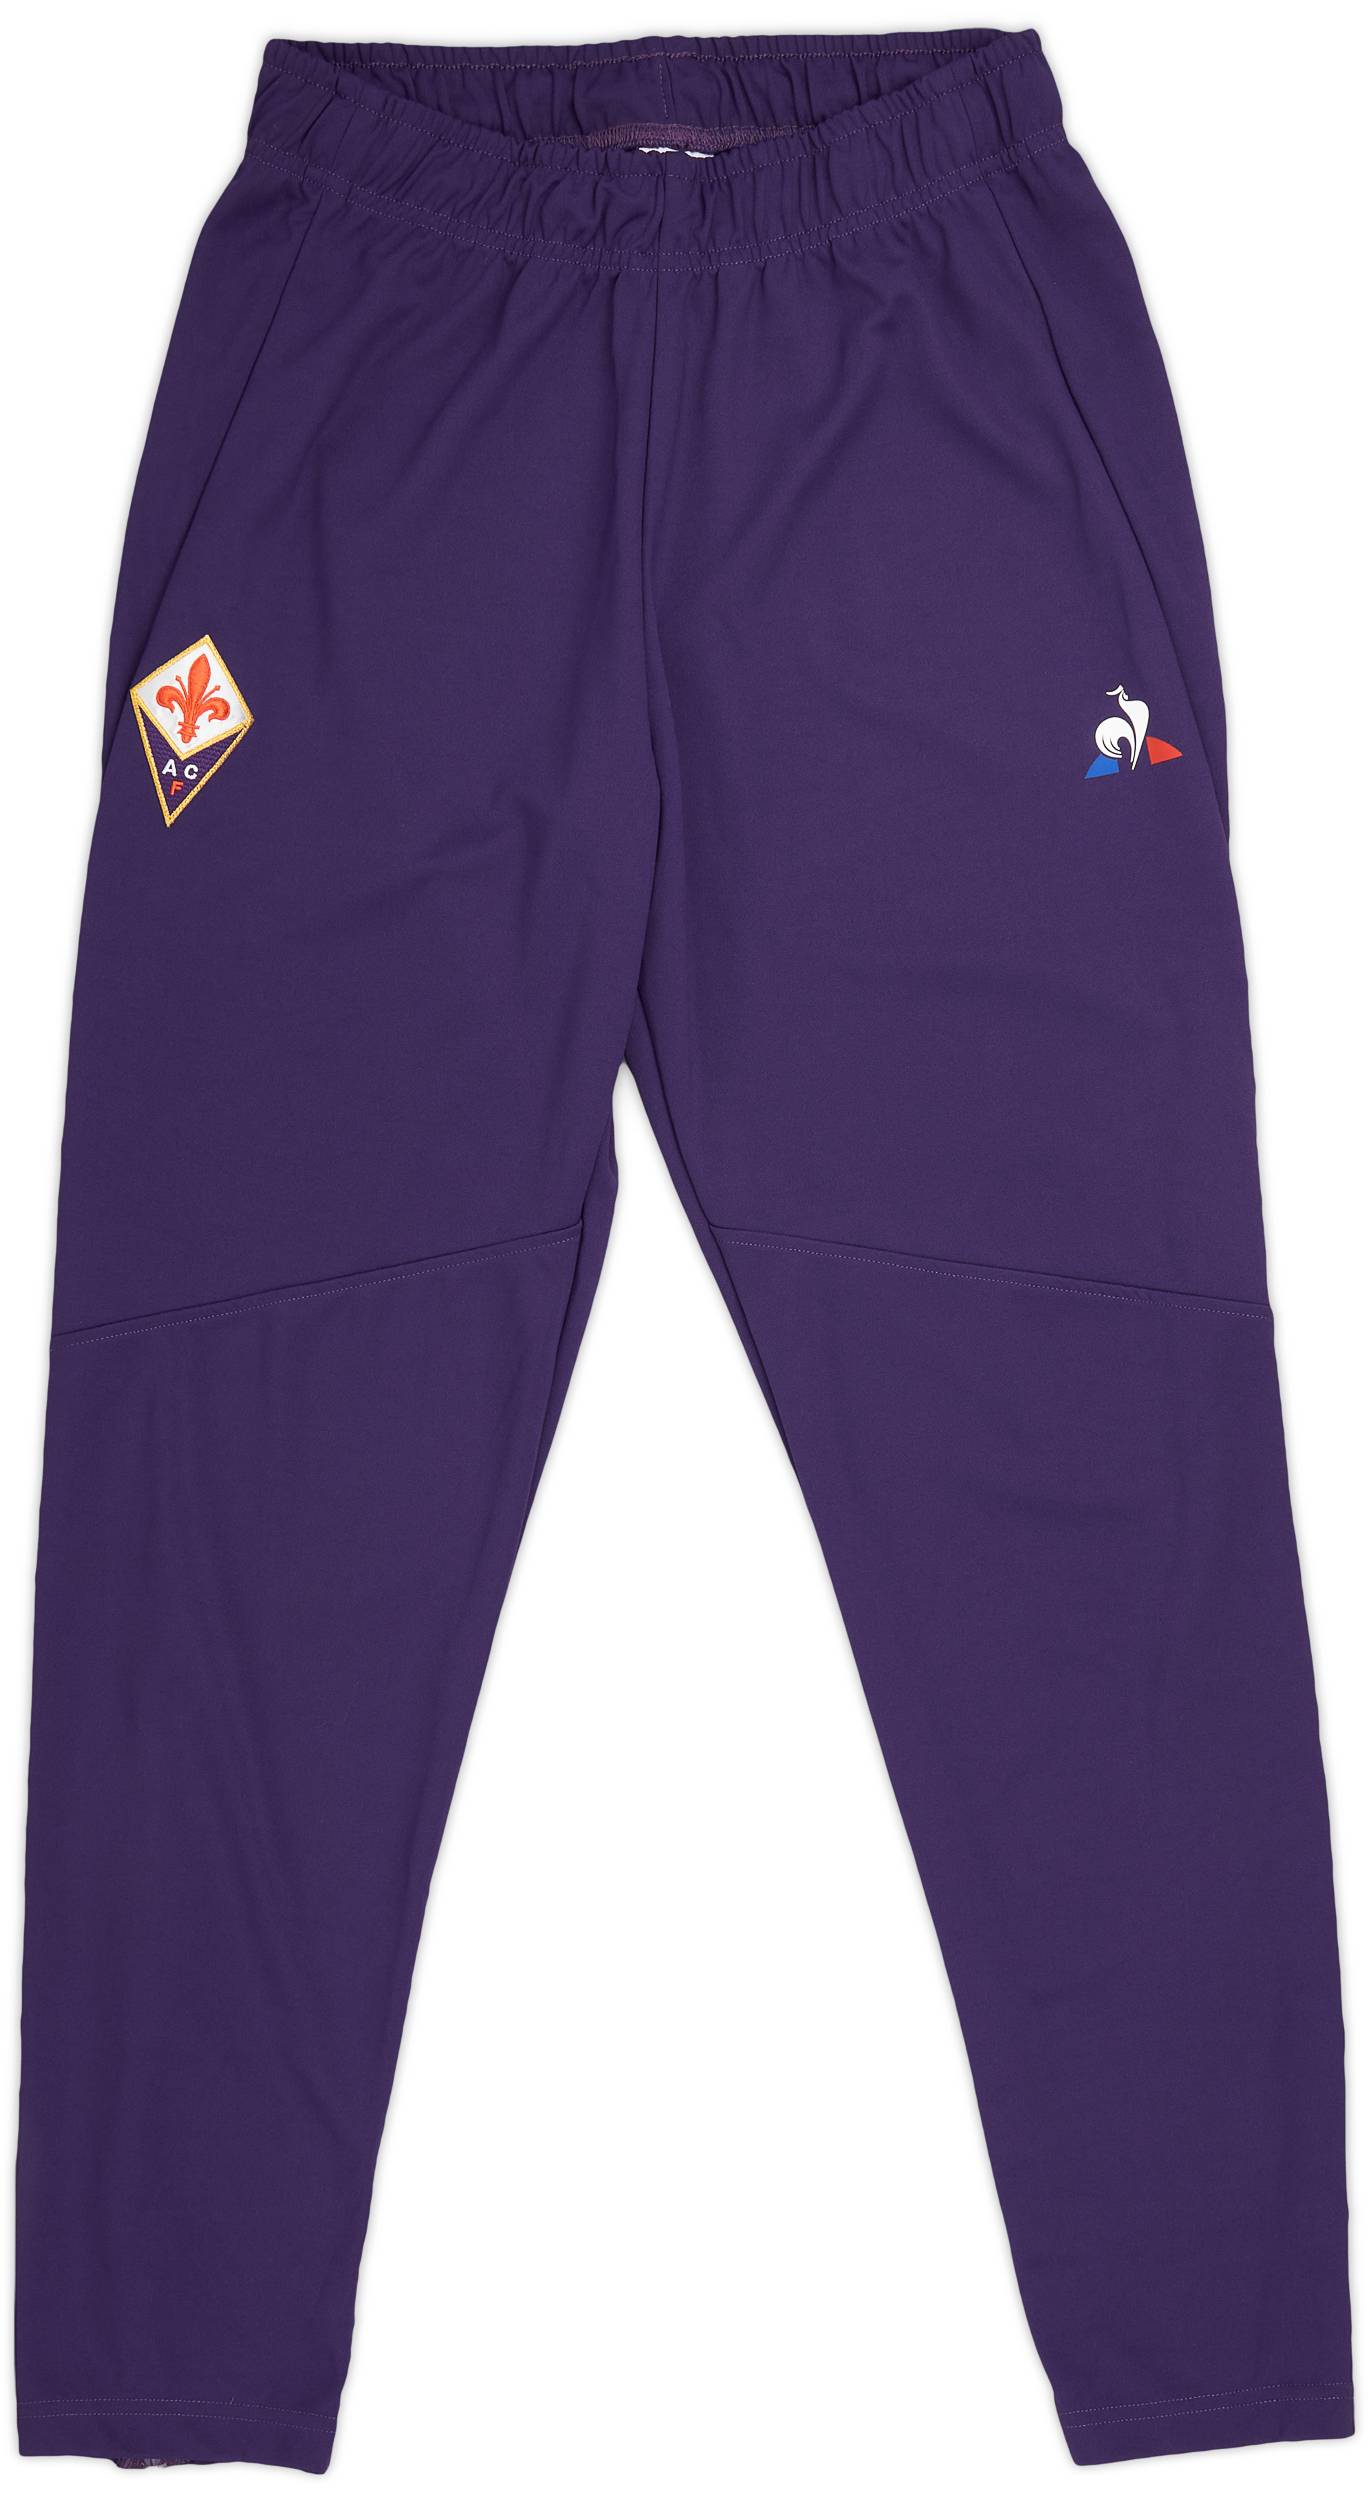 2019-20 Fiorentina Le Coq Sportif Training Pants/Bottoms - As New - (L)